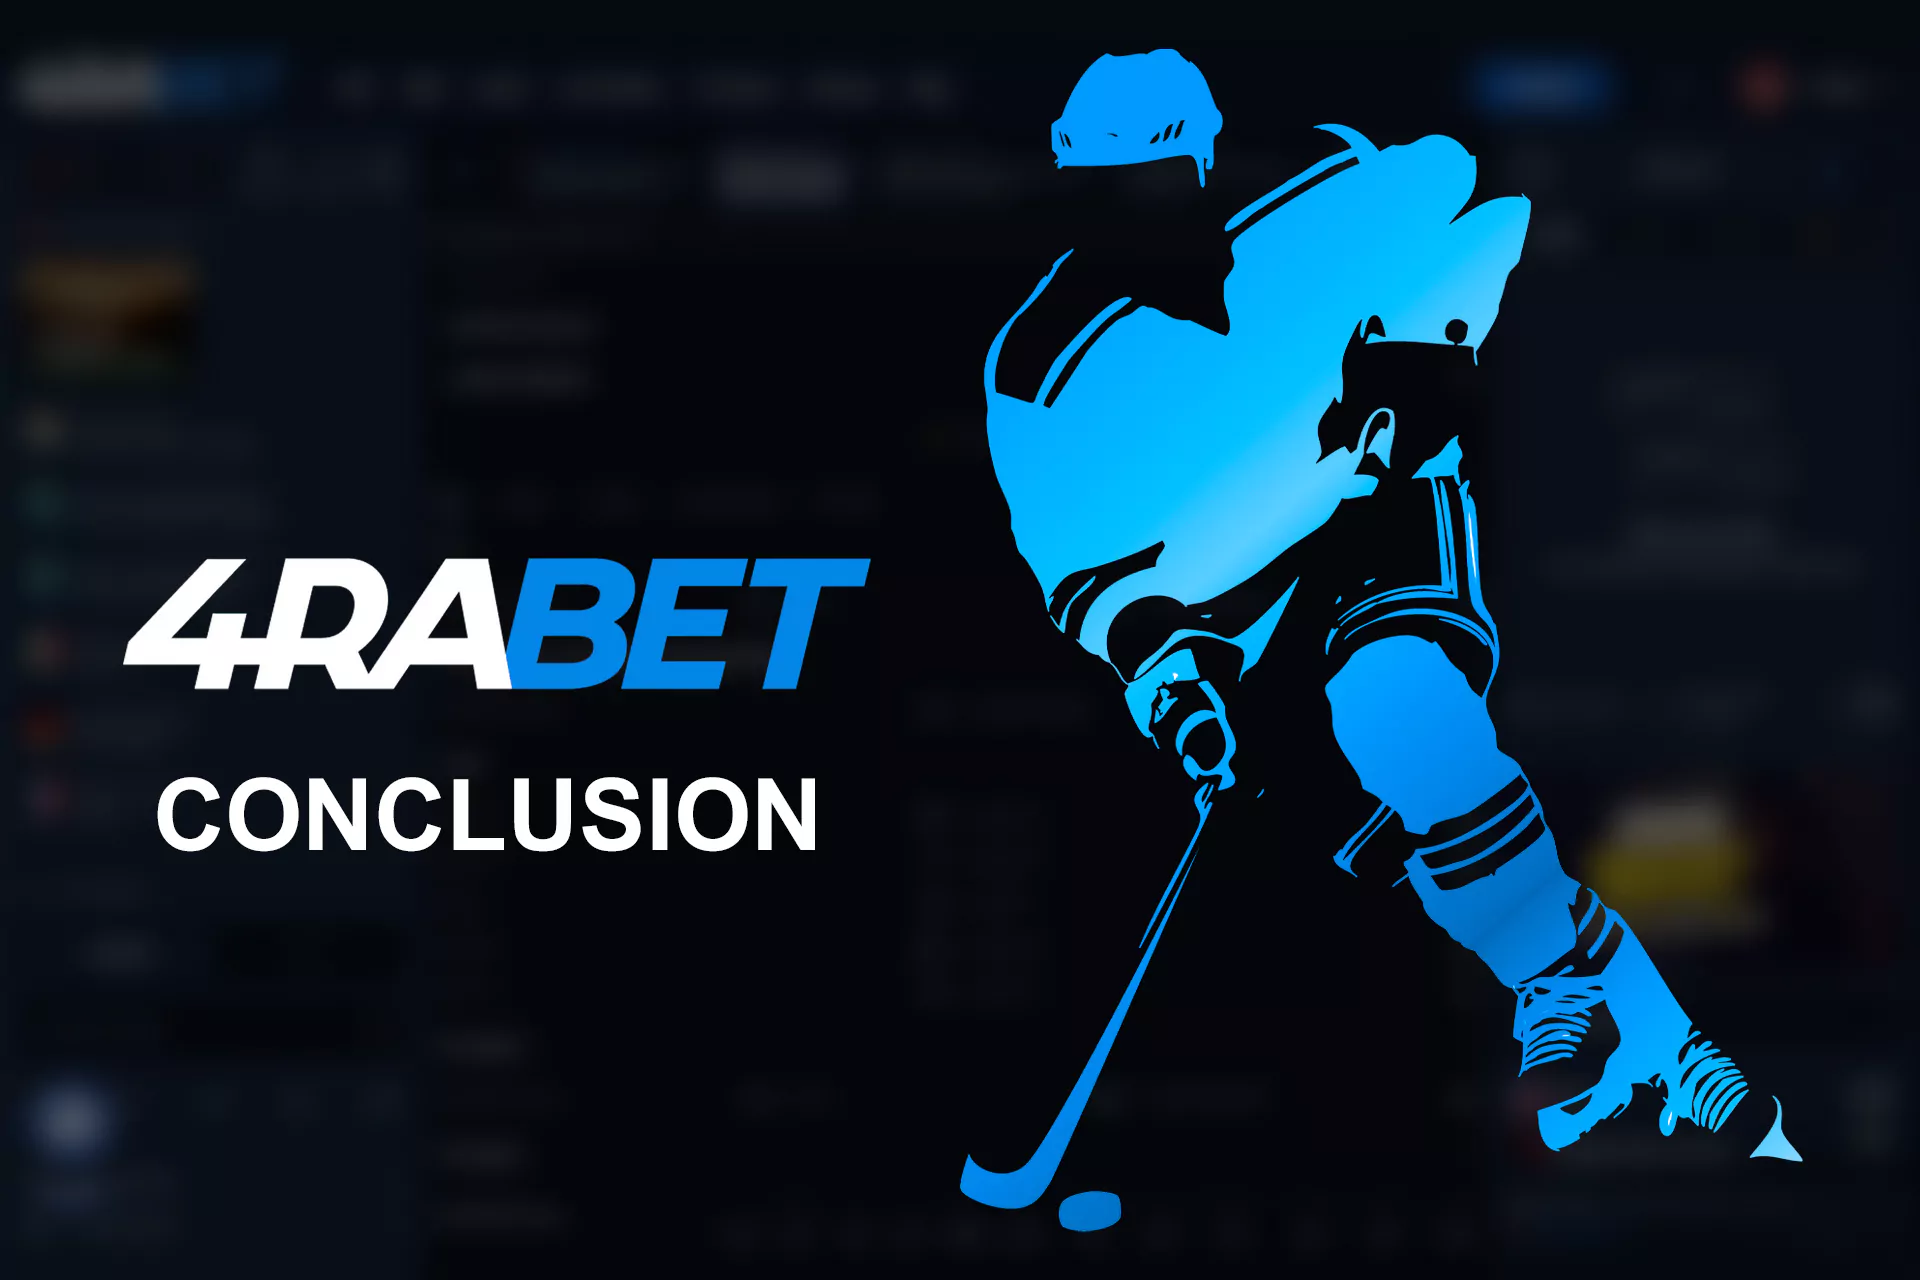 Hockey betting on 4rabet isn't complicated.